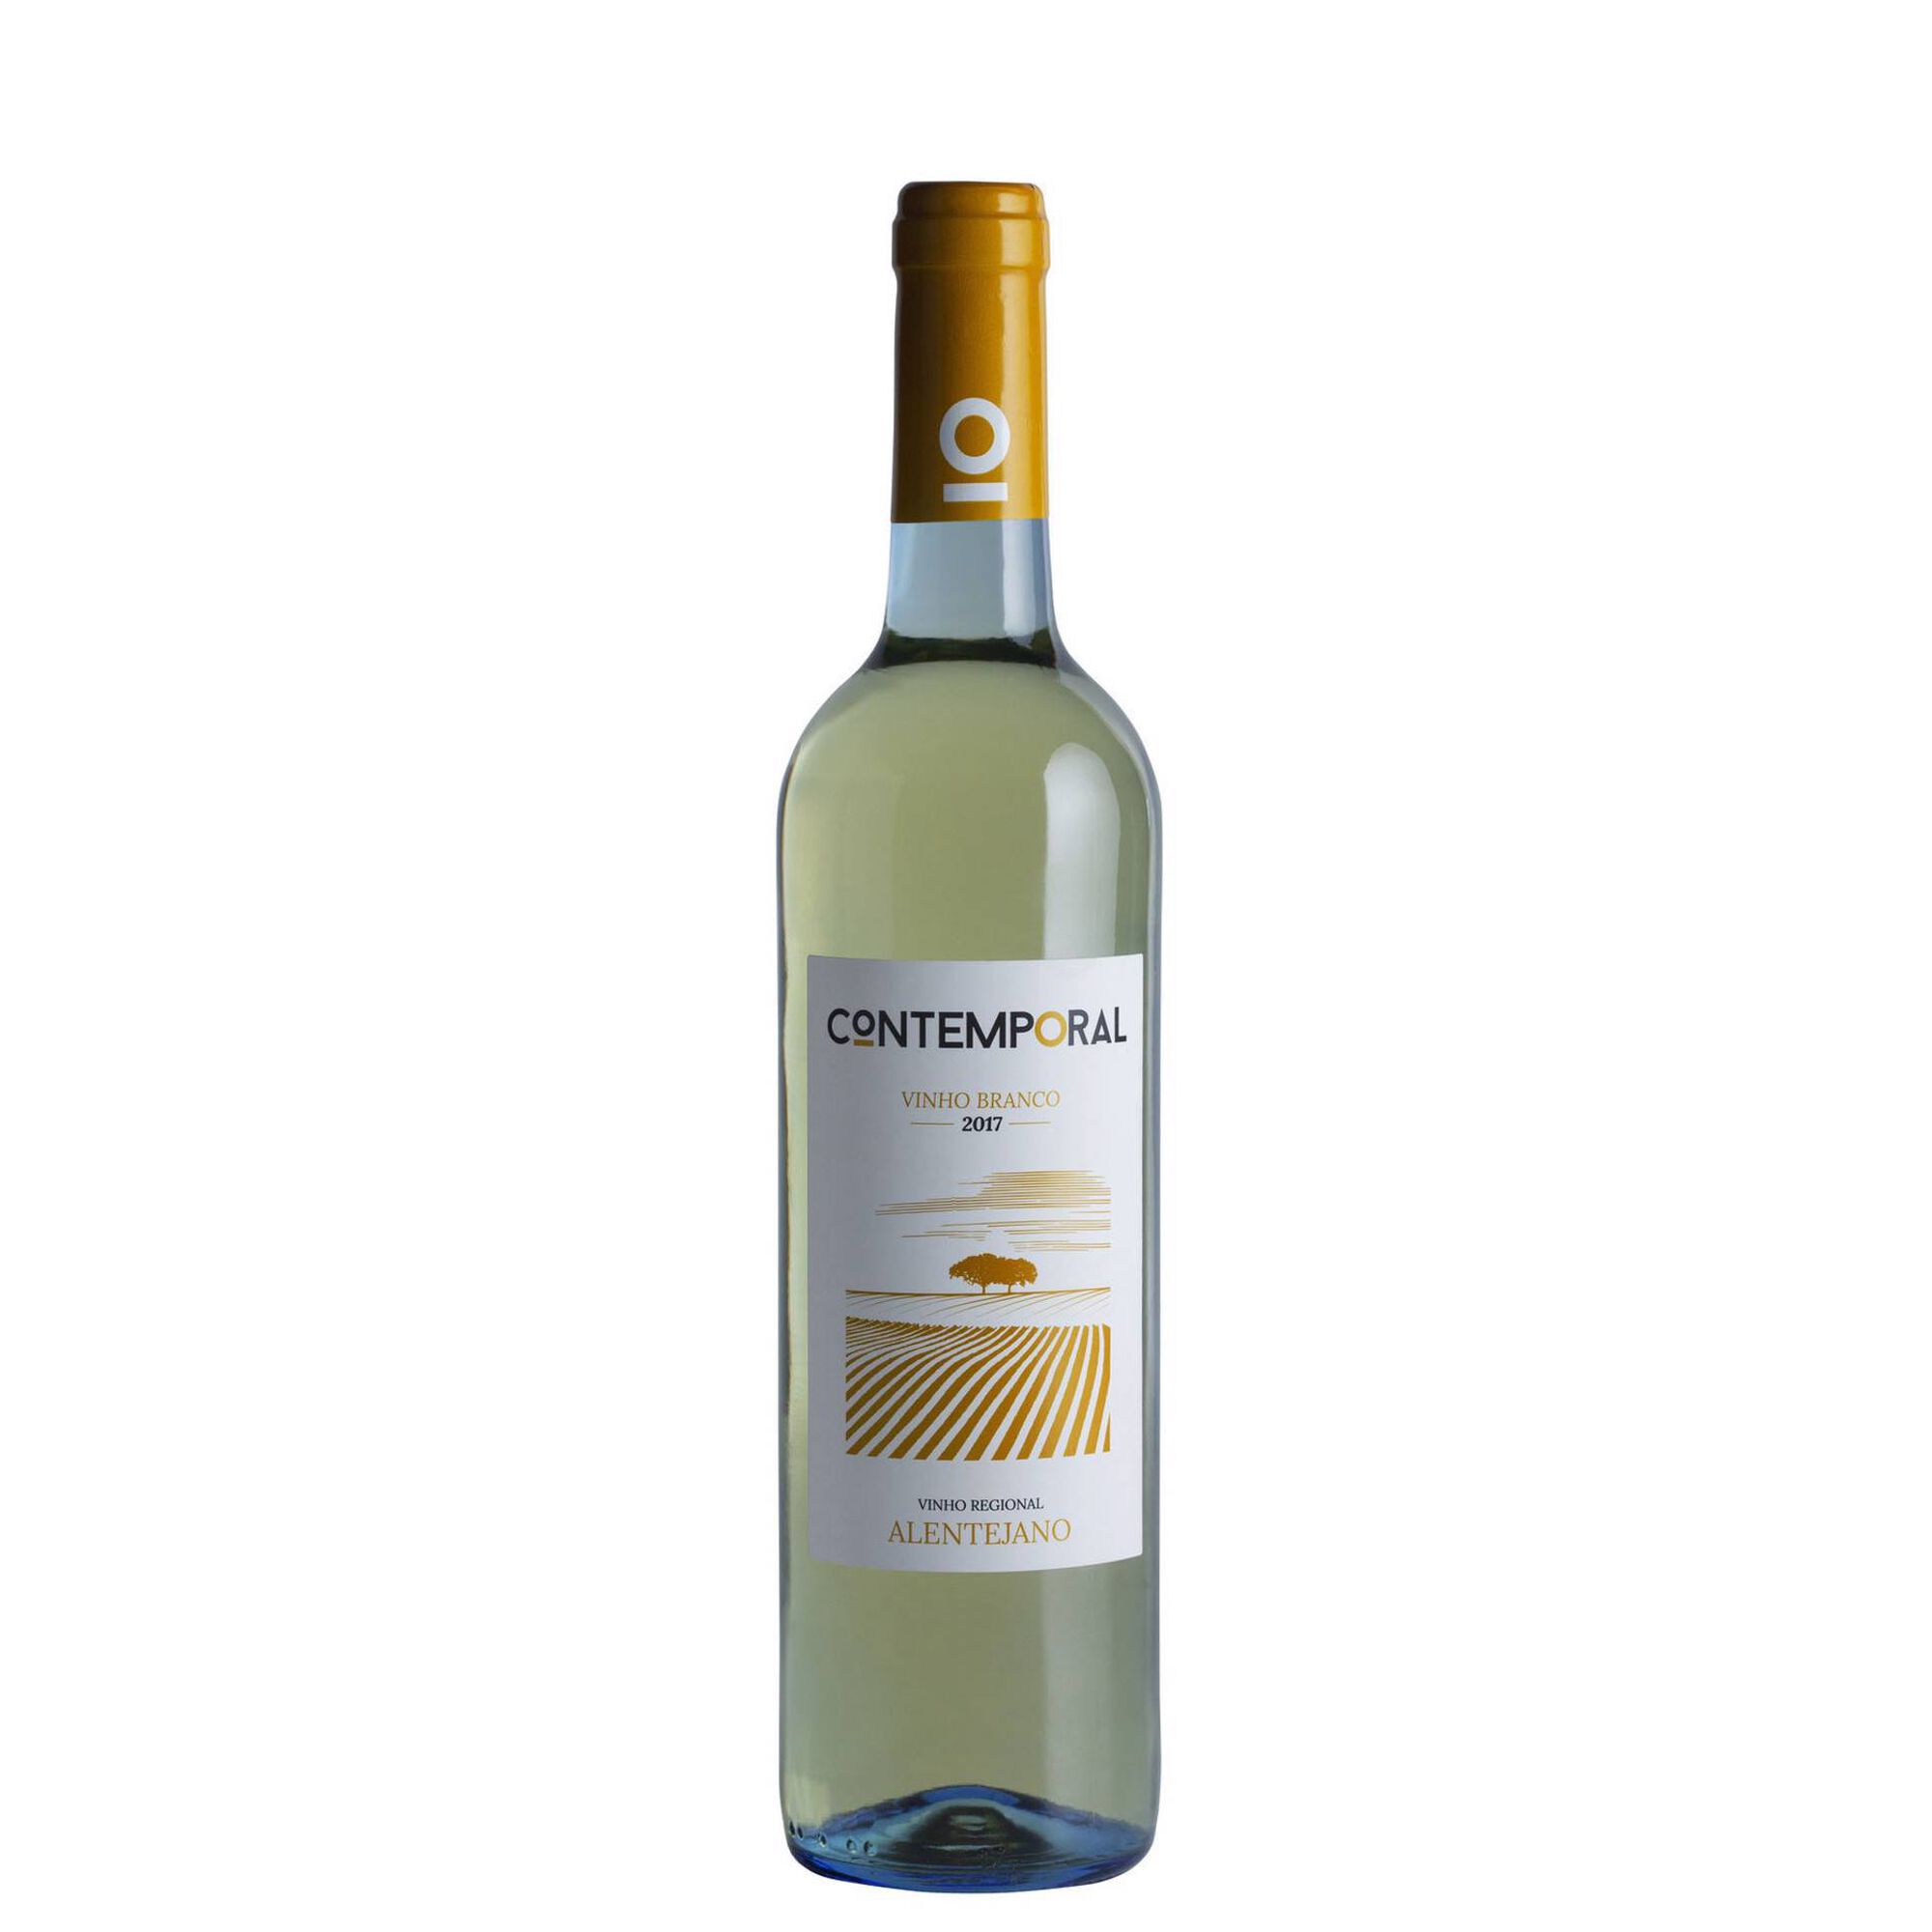 Contemporal Regional Alentejano Vinho Branco